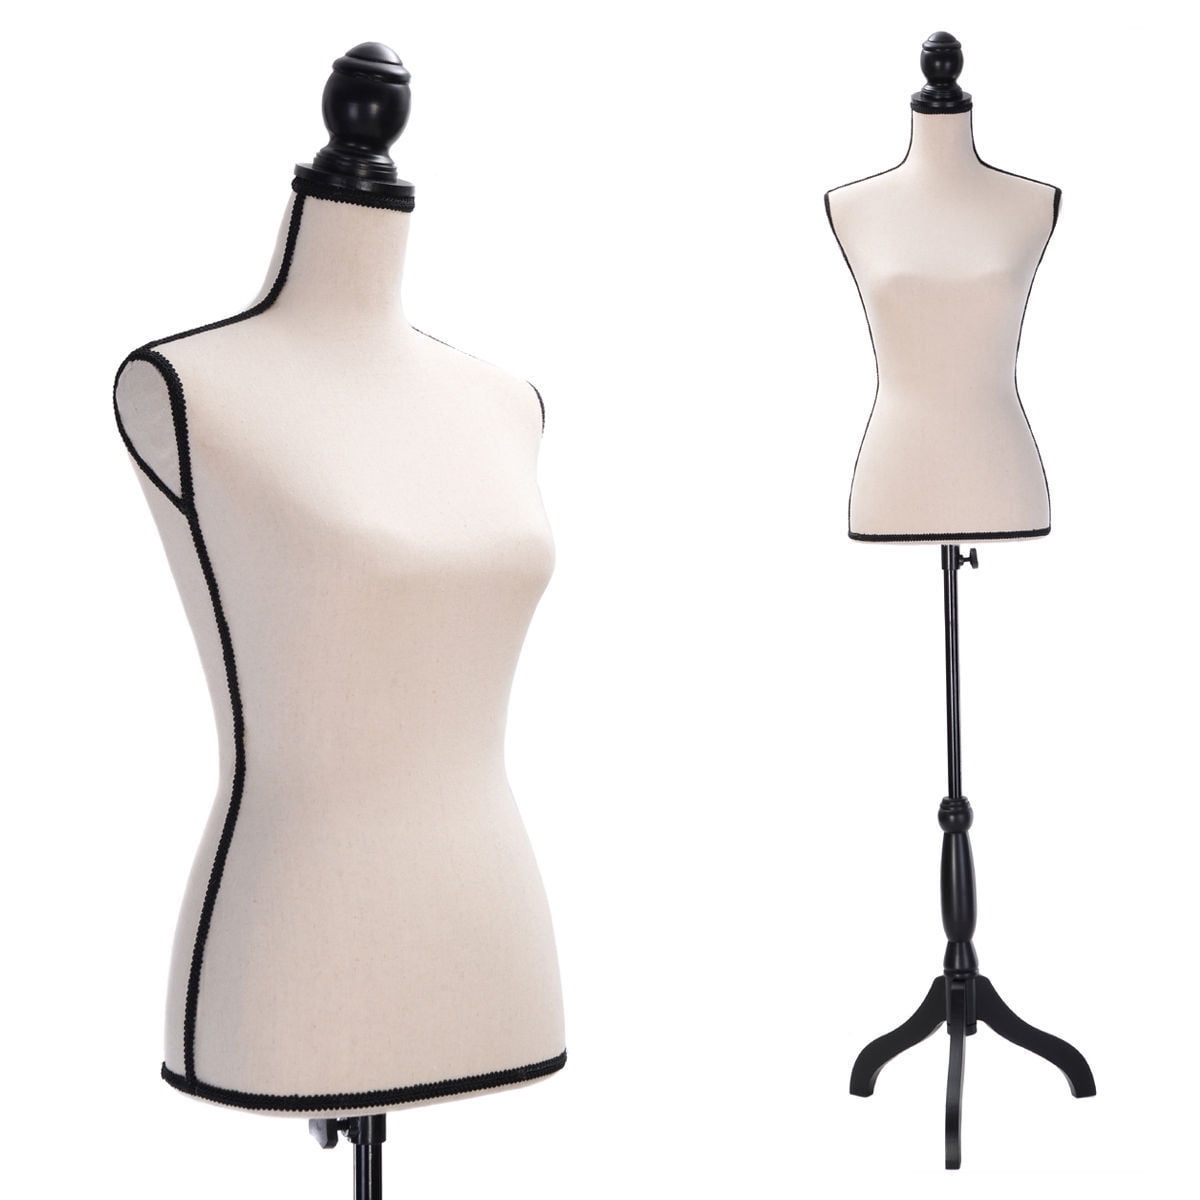 Black Female Mannequin Torso Clothing Display W/Black Tripod Stand New 